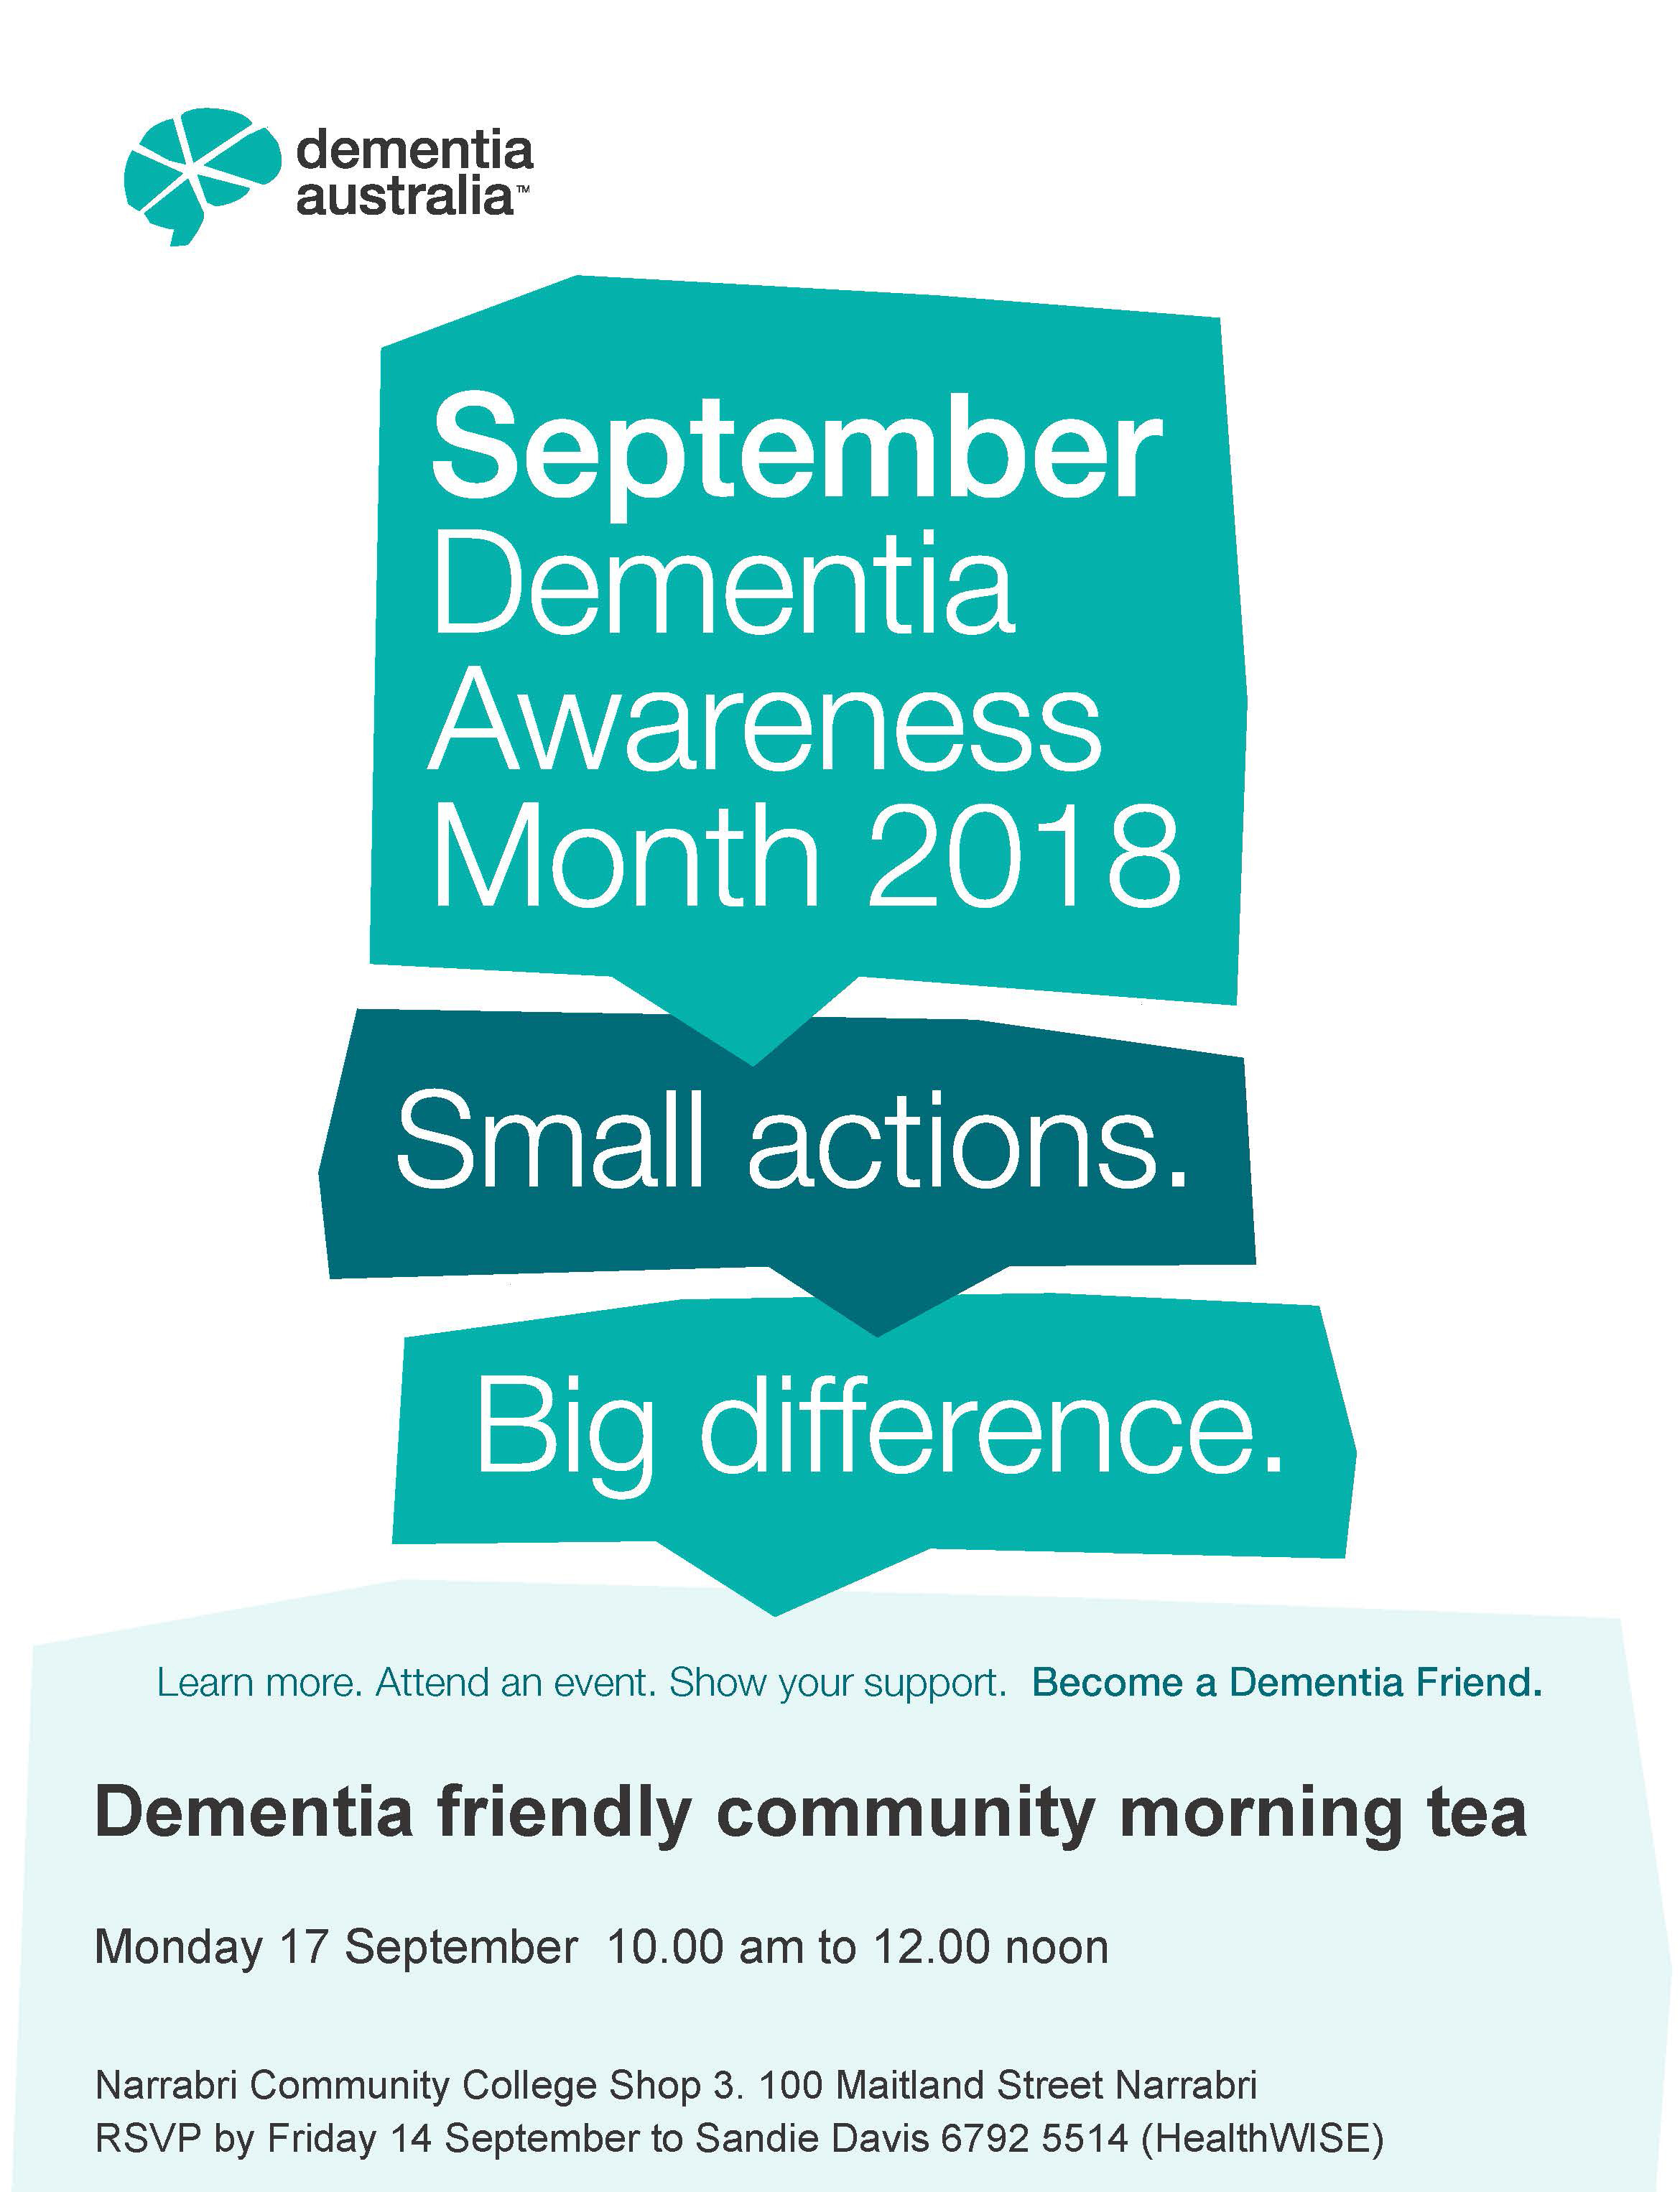 A poster for a dementia friendly community morning tea event in Narrabri